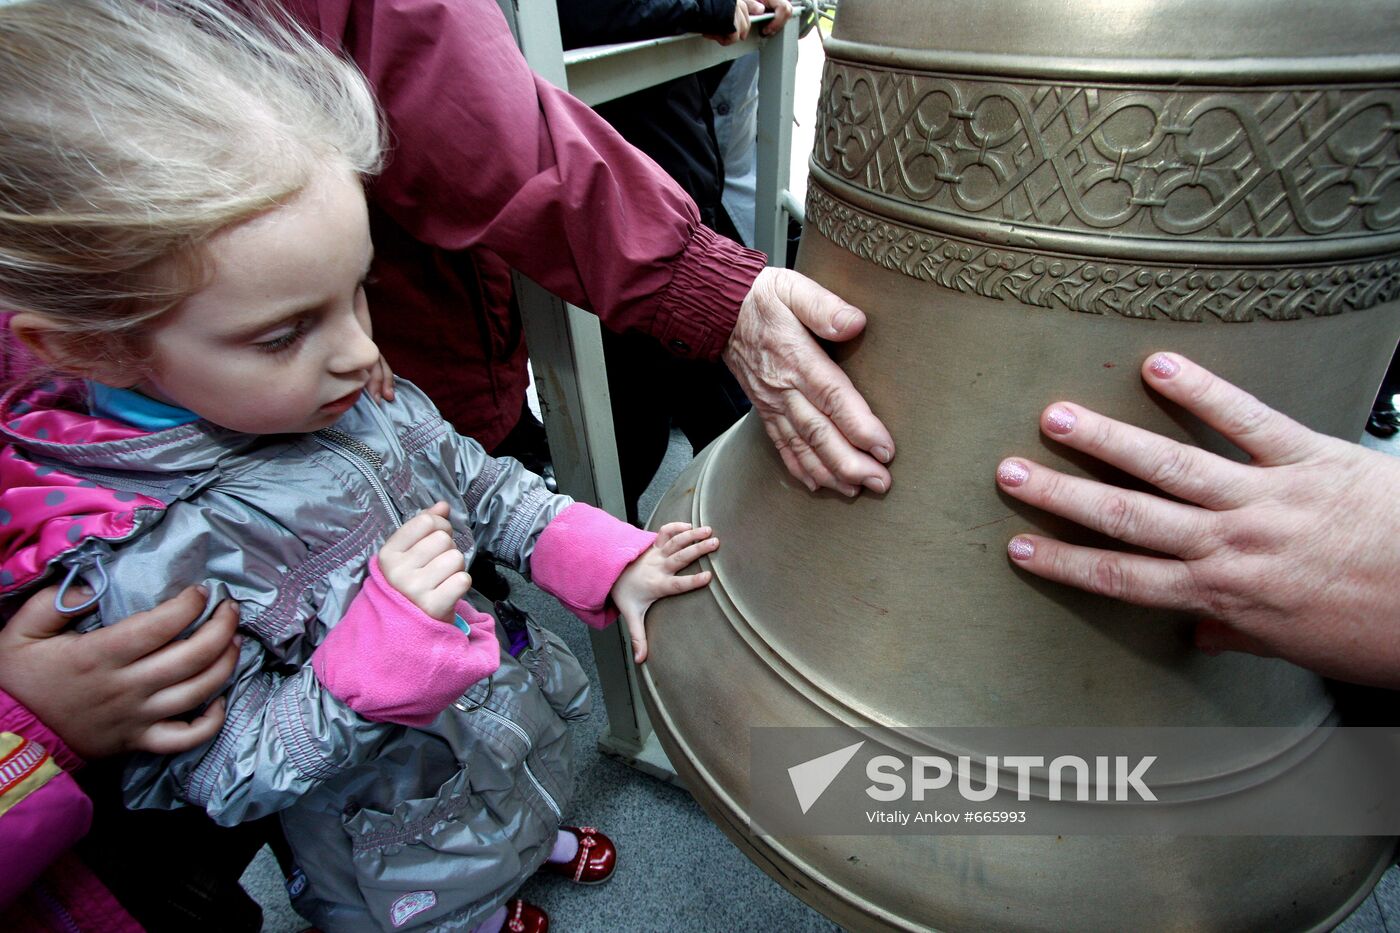 Vladivostok's Pokrovsky cathedral holds bell ringing festival